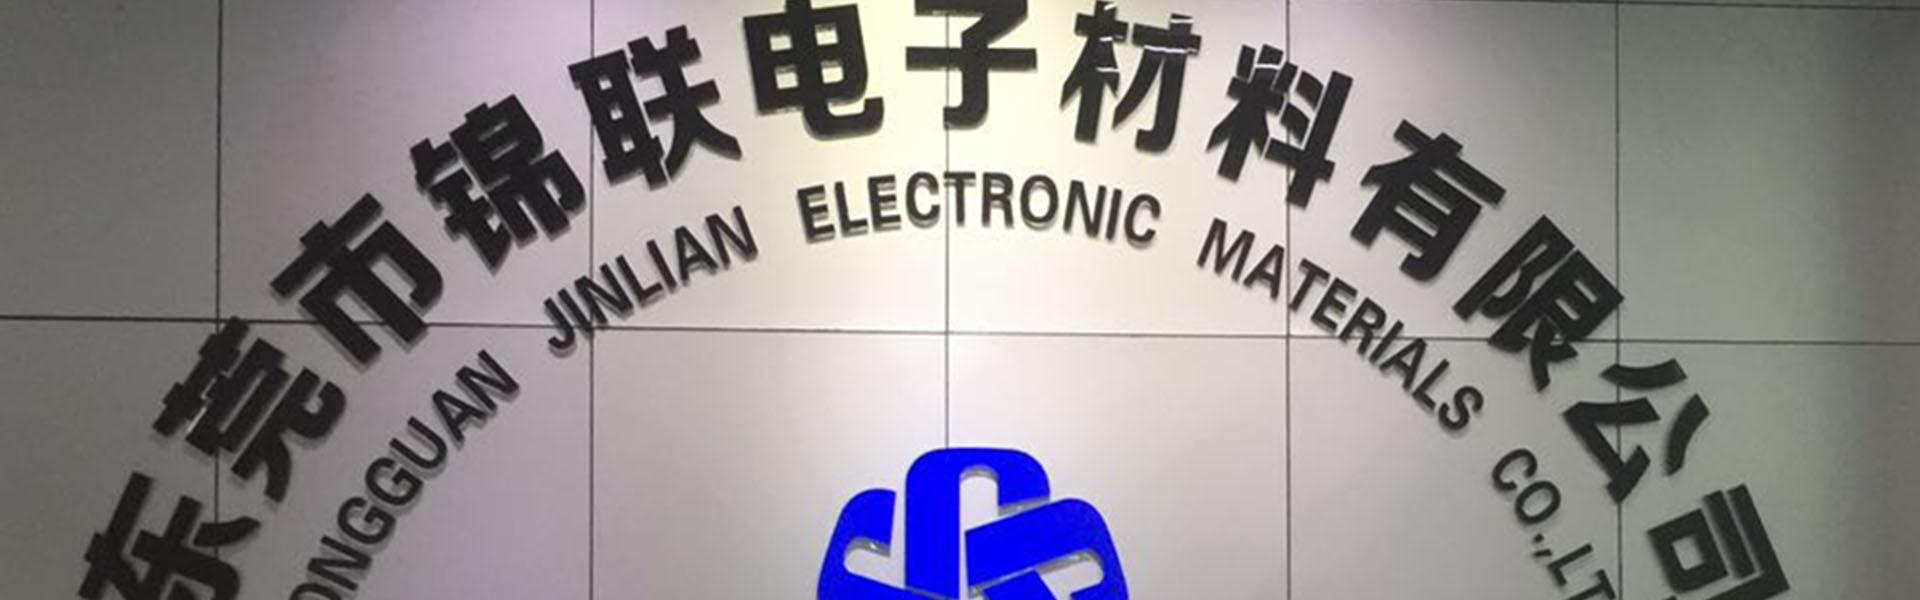 blisterförpackning, bricka, bärtejp,Dongguan Jinlian Electronic Materials Co., Ltd